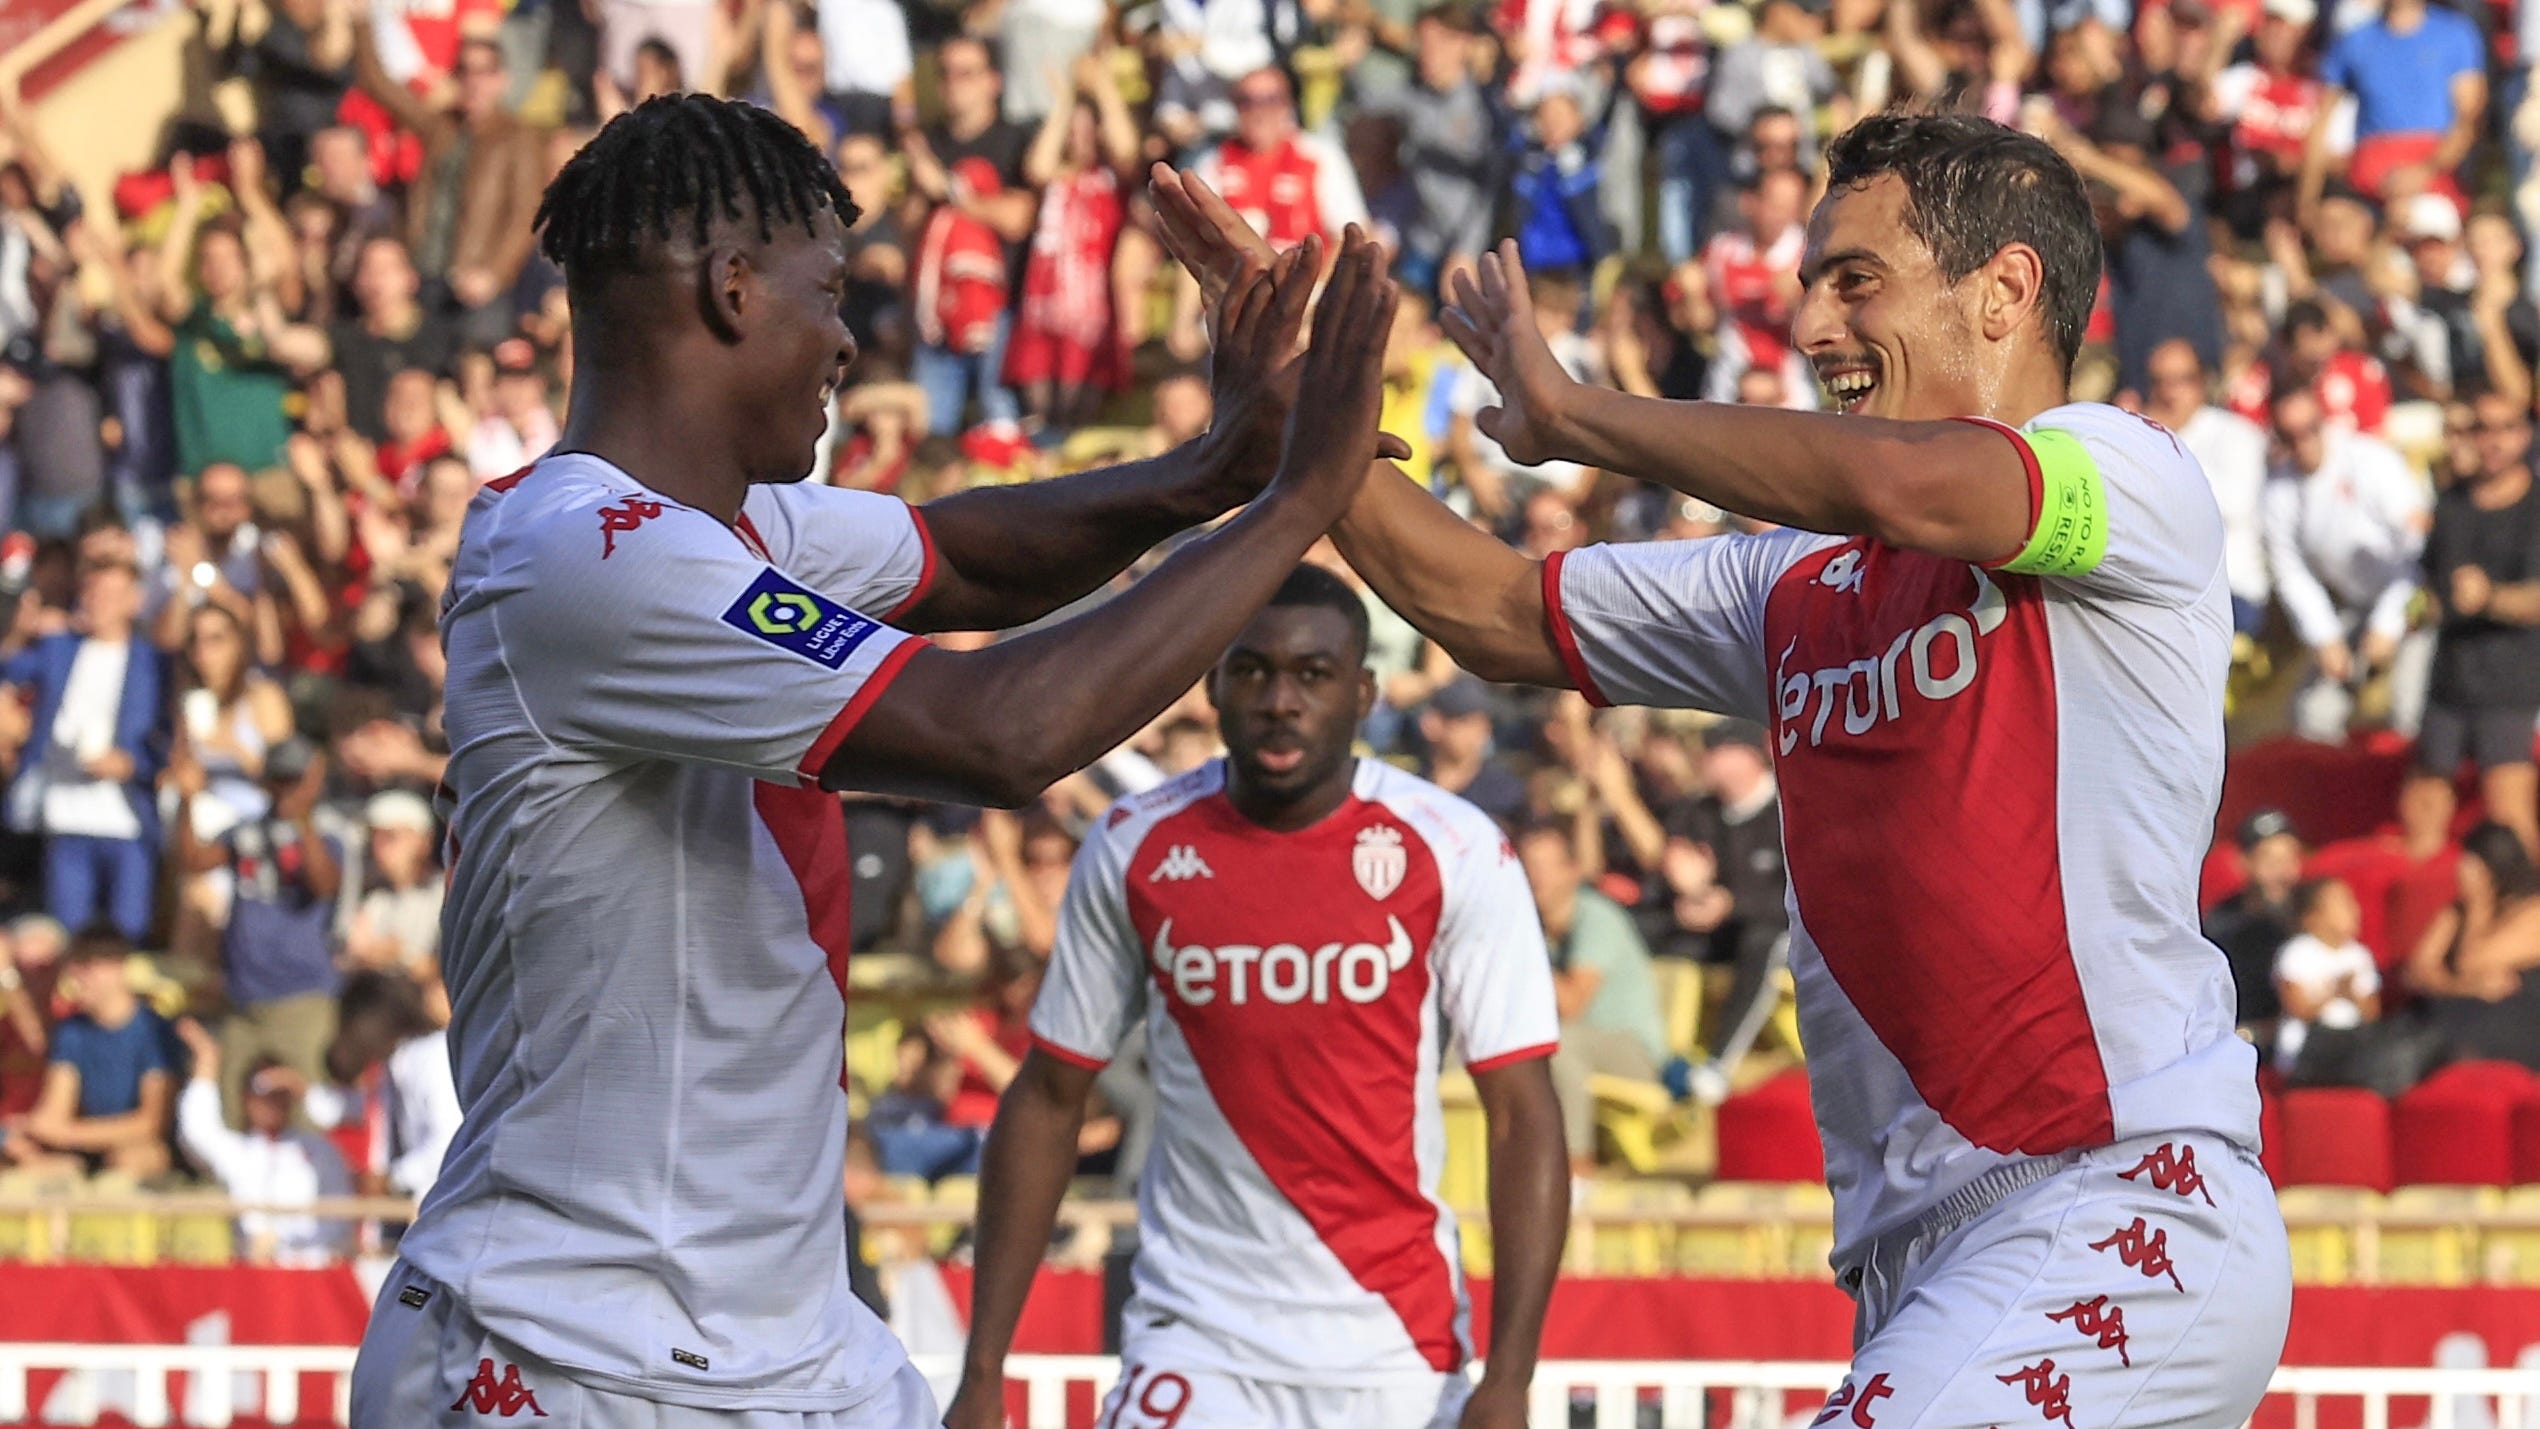 Goal and Highlights: Crvena Zvezda 0-1 Monaco in UEFA Europa League